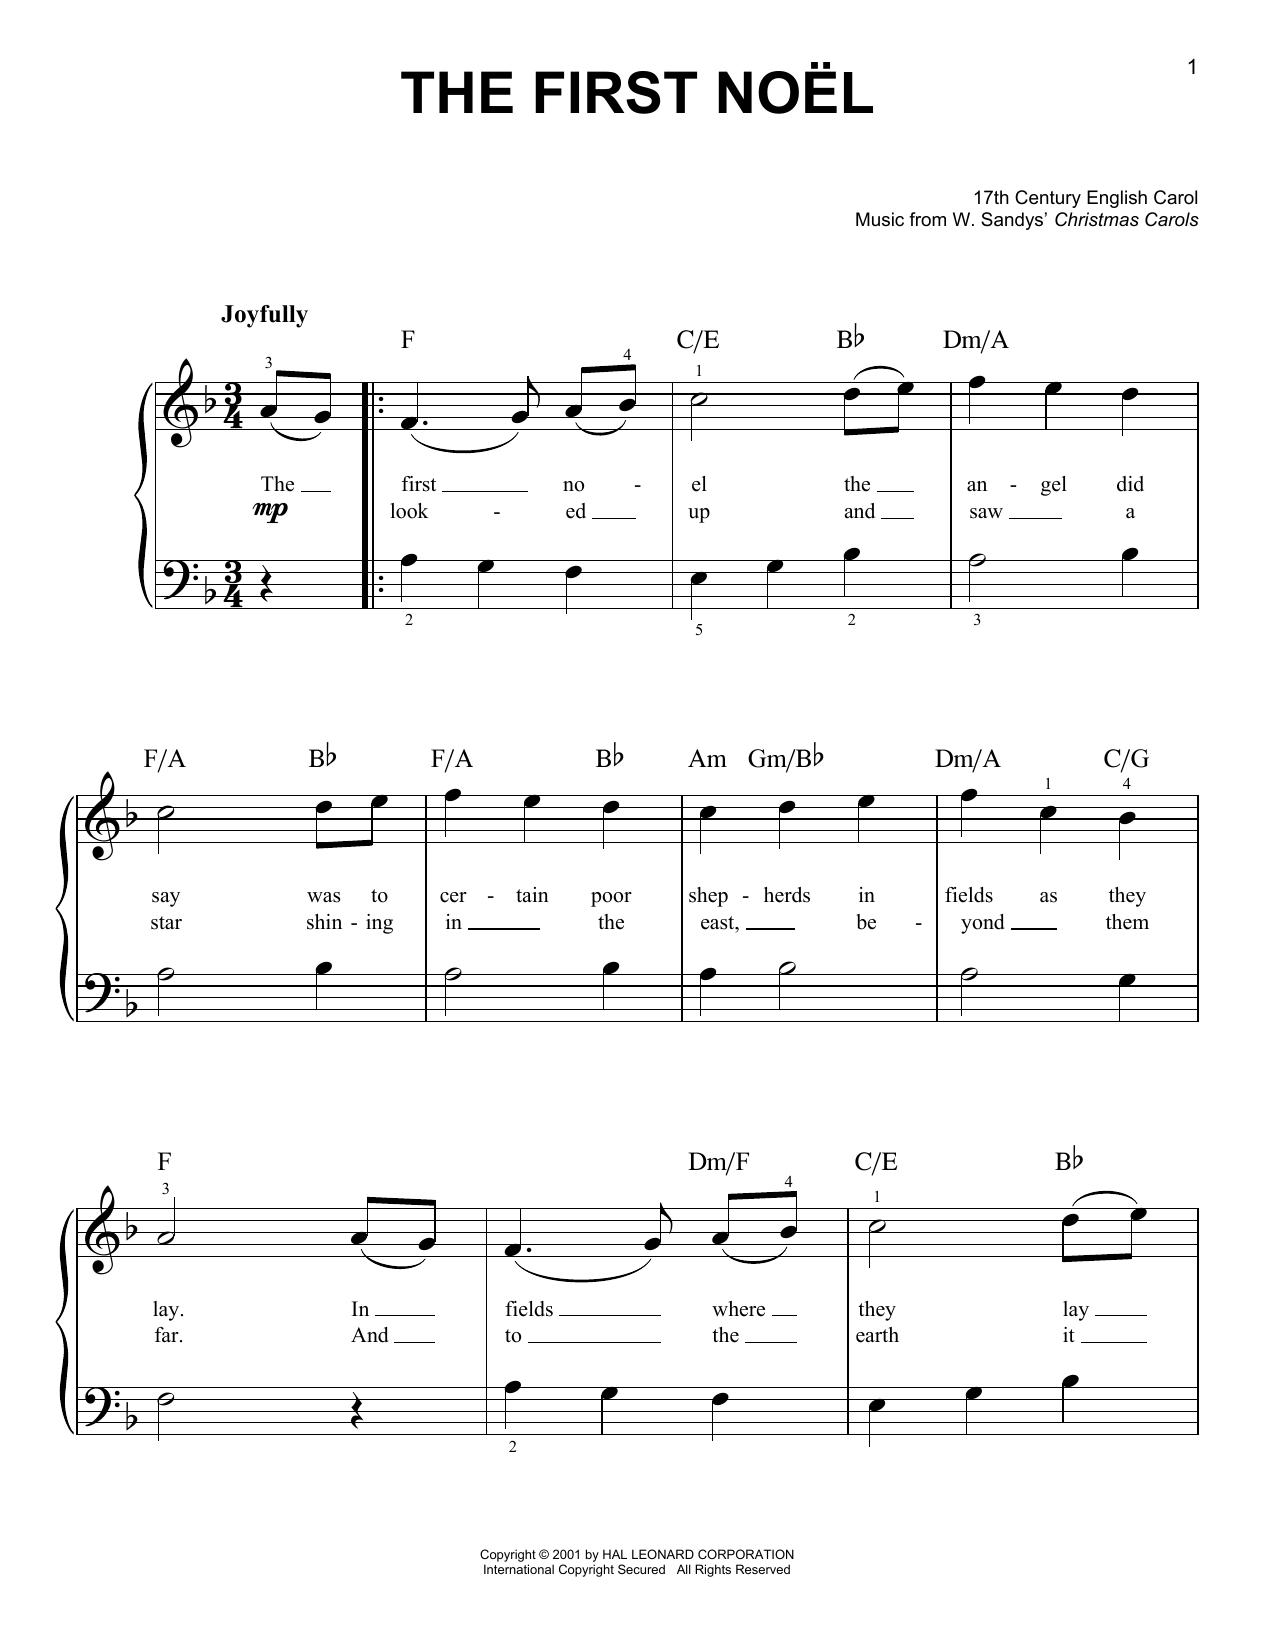 W. Sandys' Christmas Carols The First Noel Sheet Music Notes & Chords for Ukulele - Download or Print PDF